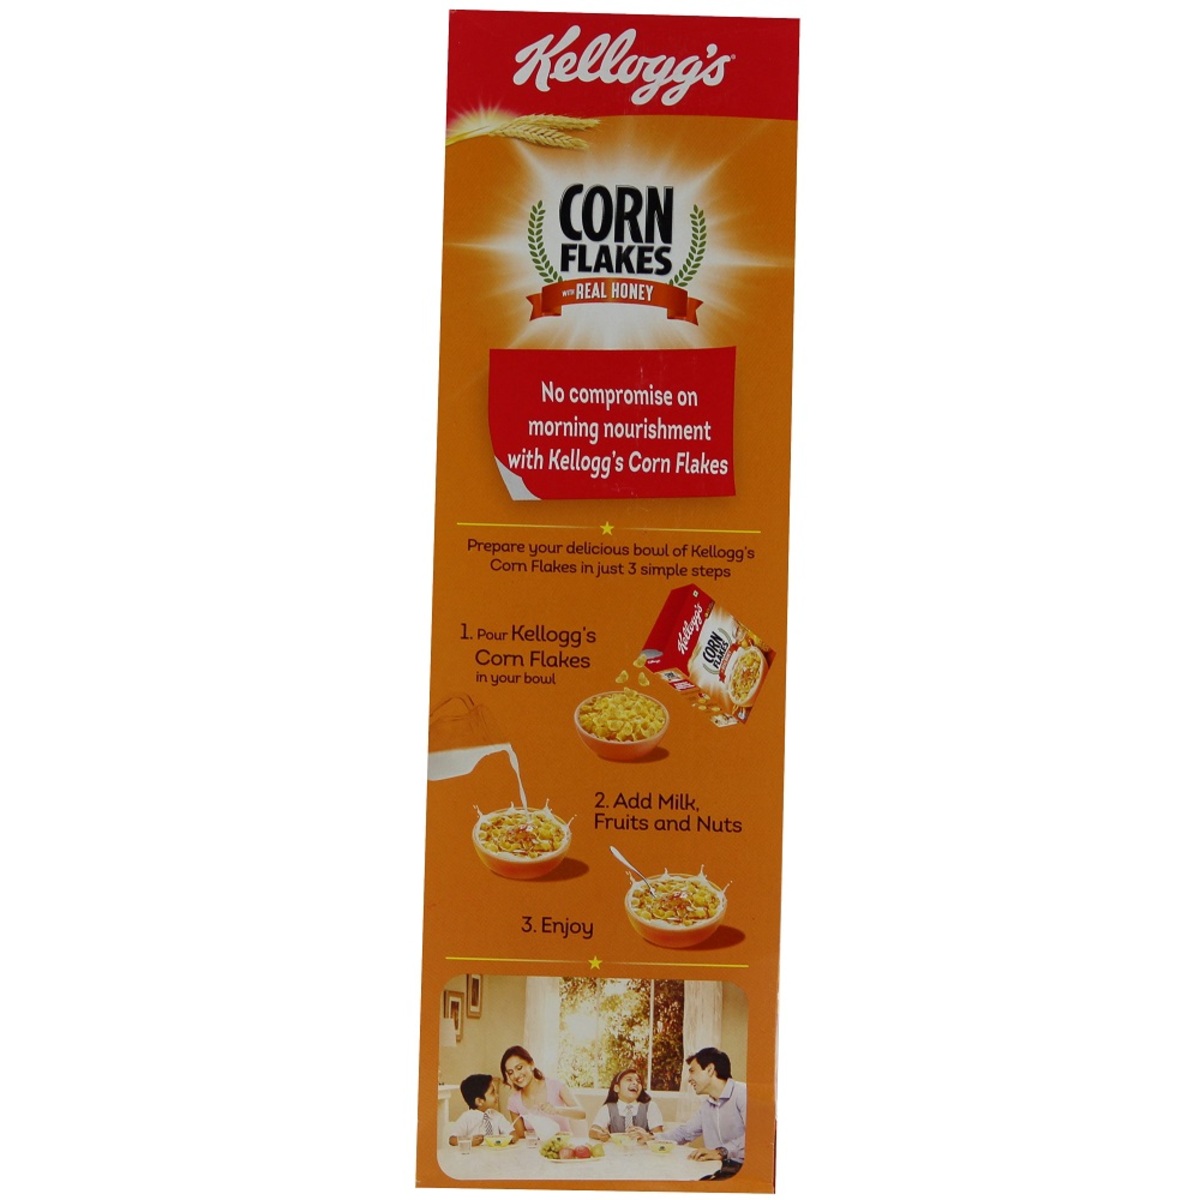 Kellogg's Corn Flakes Real Honey 630g